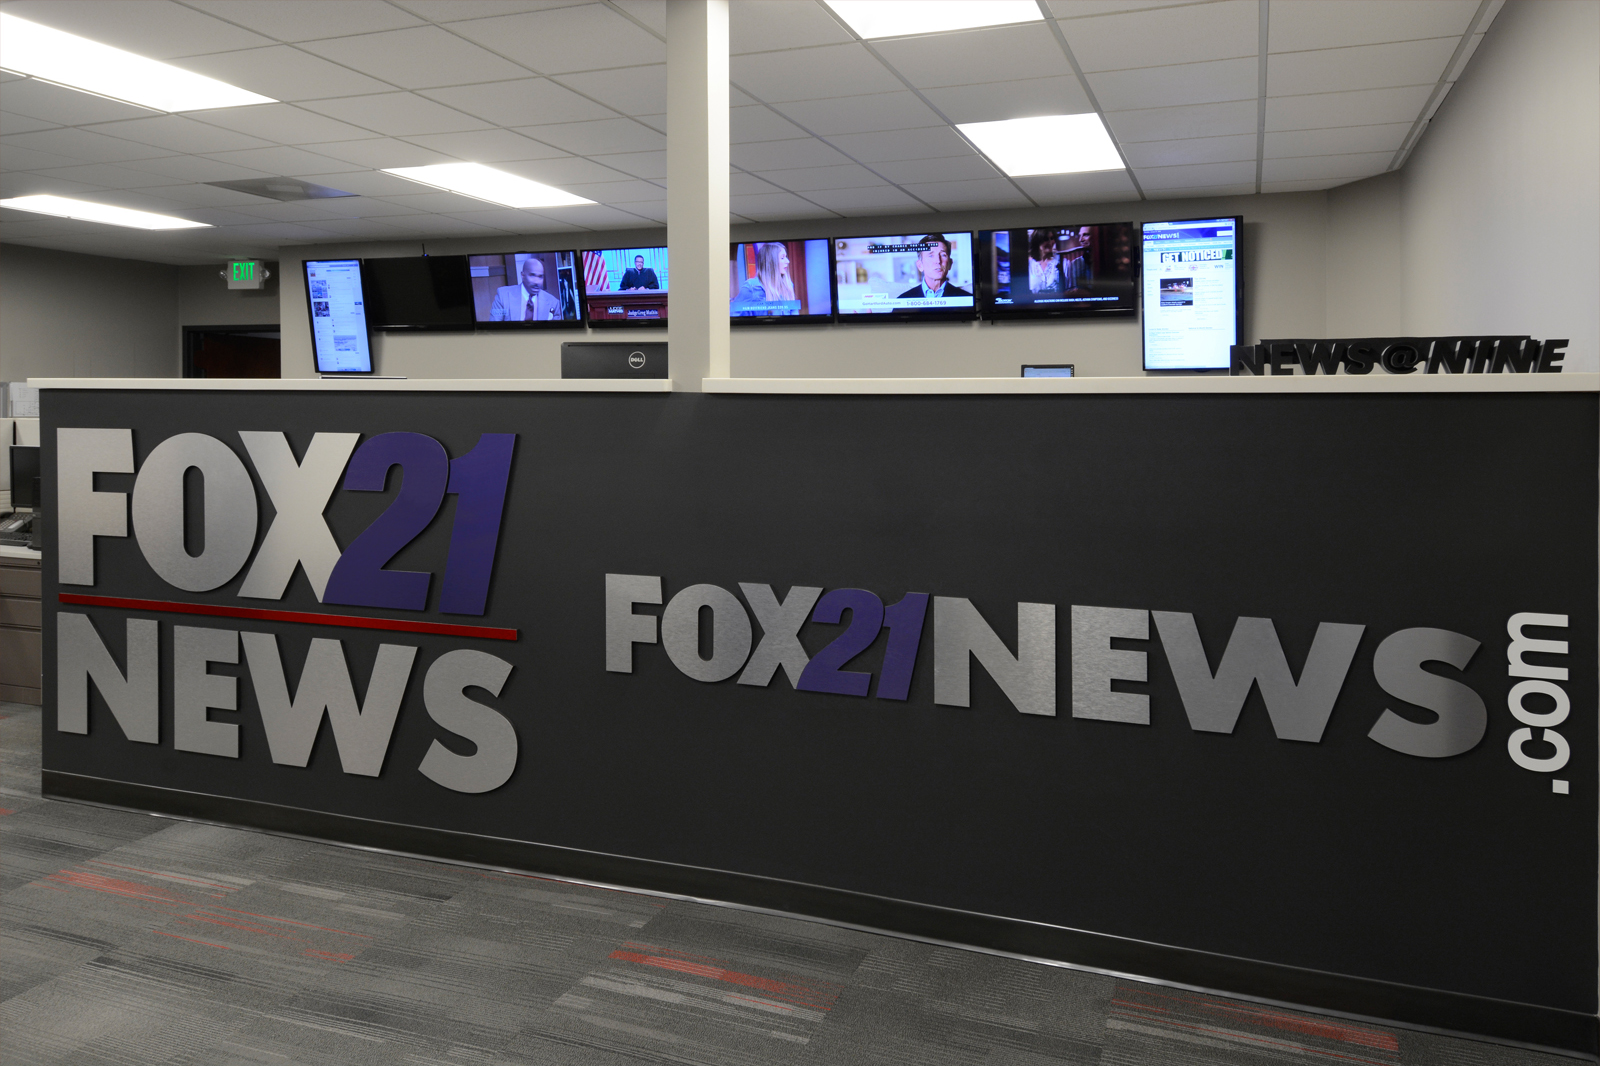 Fox 21 News